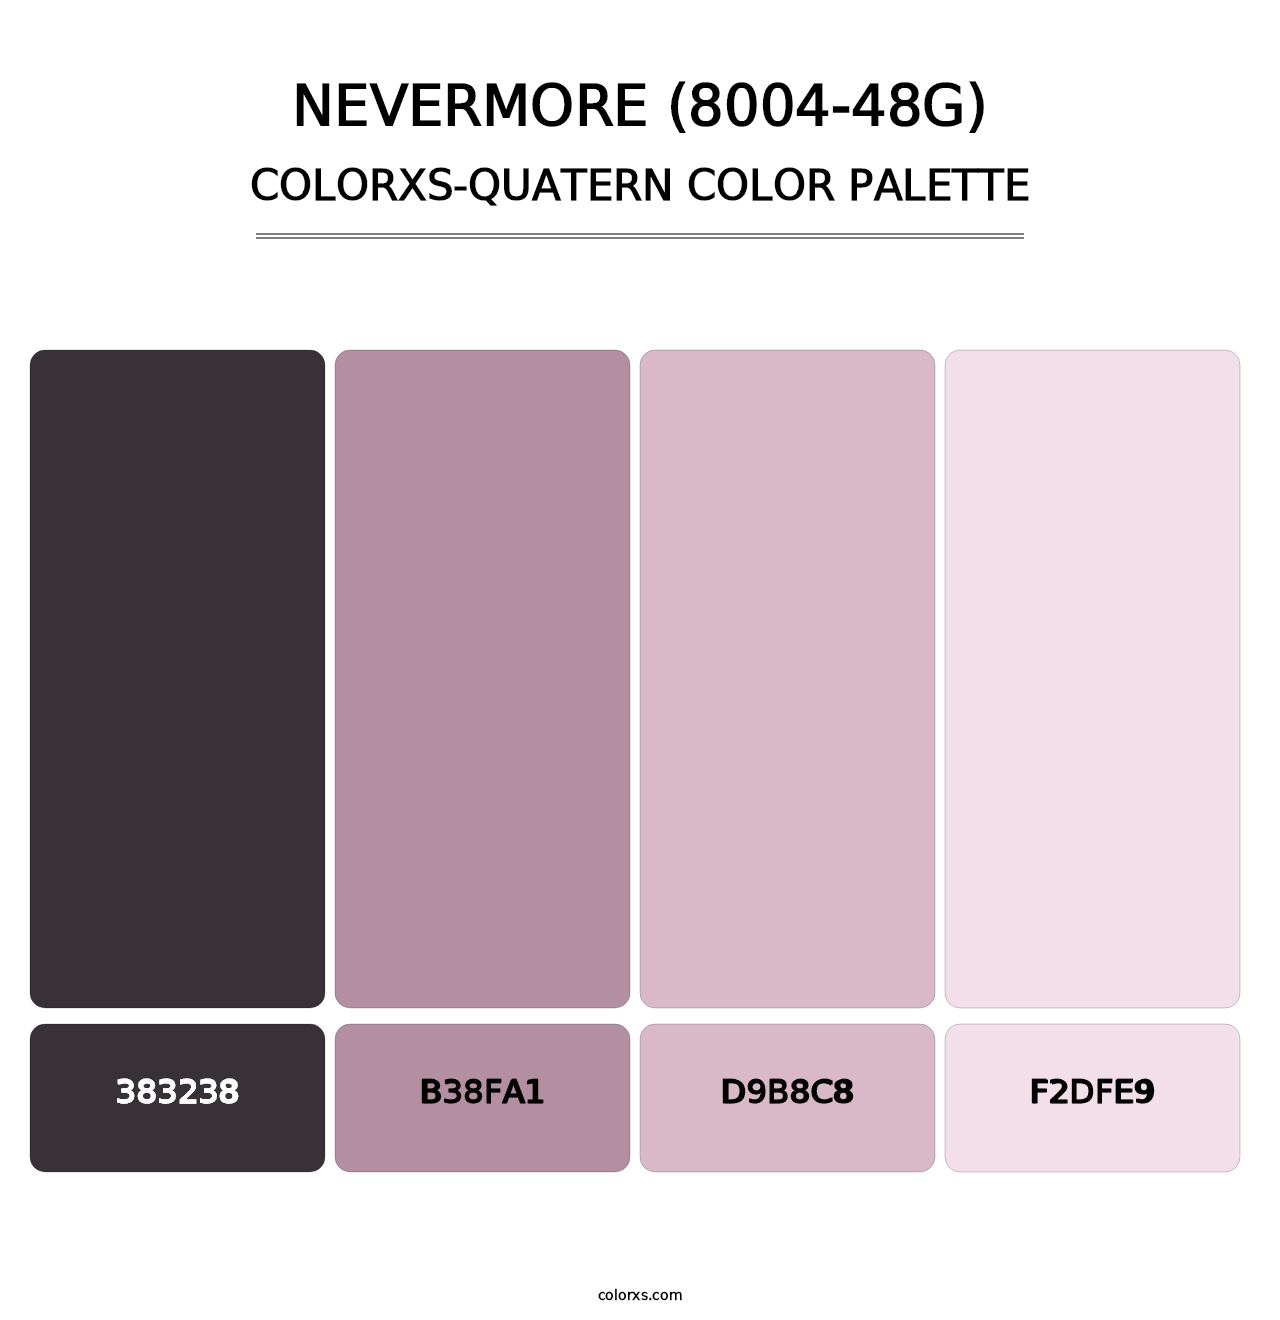 Nevermore (8004-48G) - Colorxs Quatern Palette